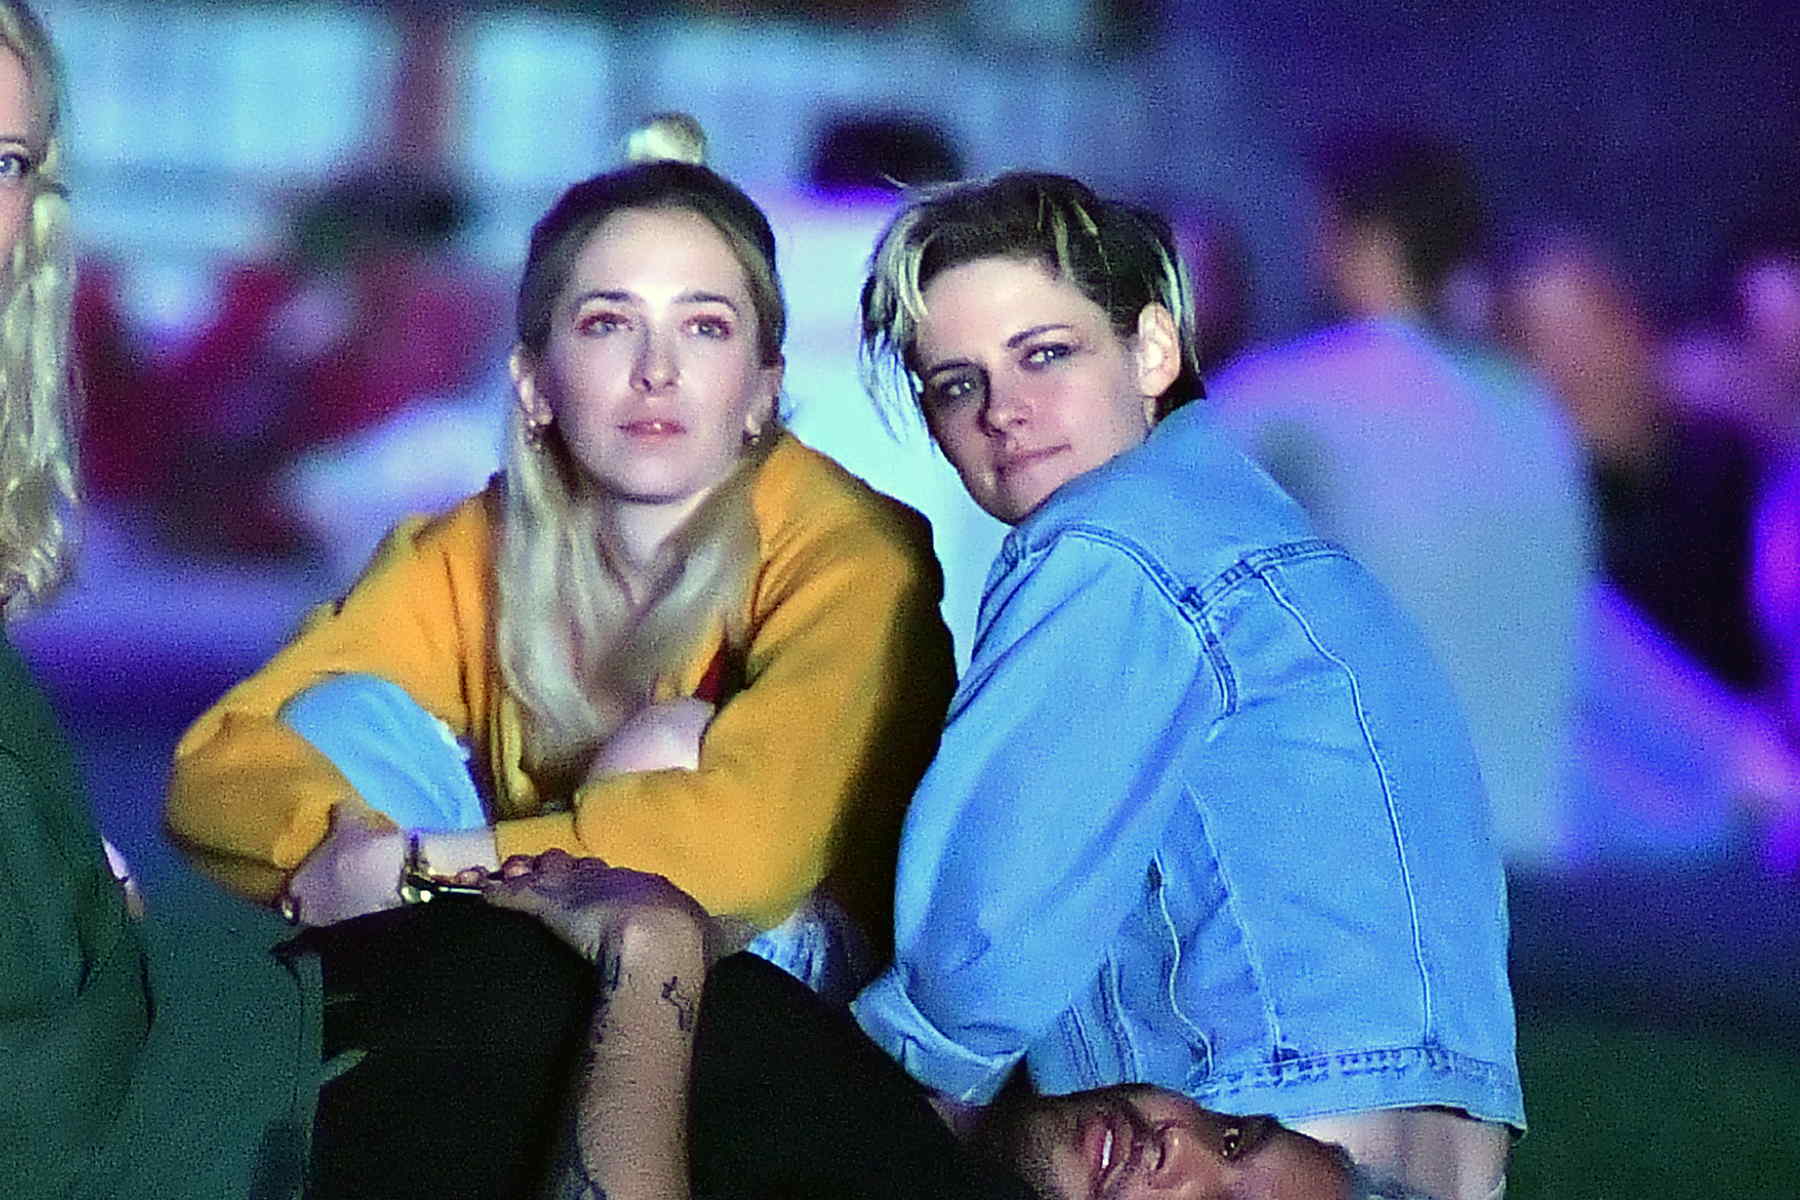 Kristen_Stewart_-_and_Sarah_Dinkin_enjoy_a_night_at_Coachella_in_Indio2C_CA_-_April_126.jpg